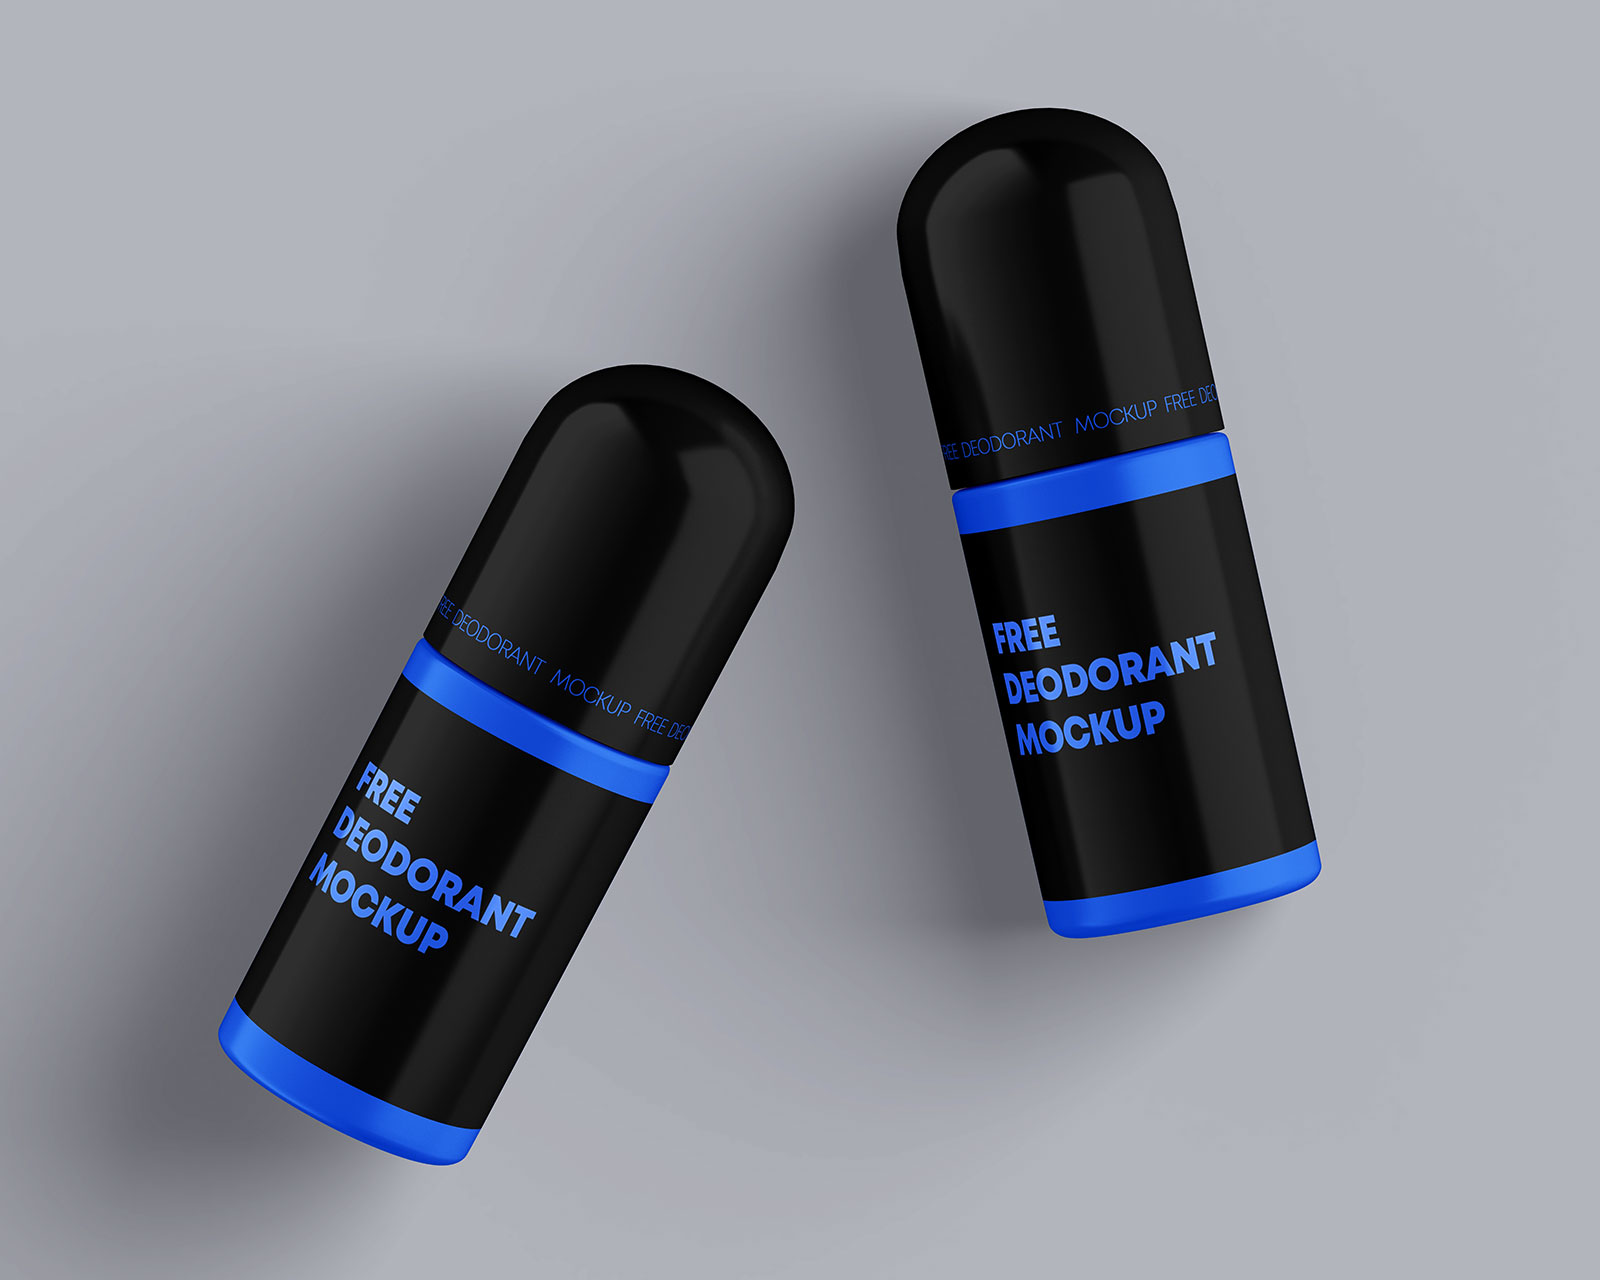 Free Men's Deodorant Bottle Mockup PSD